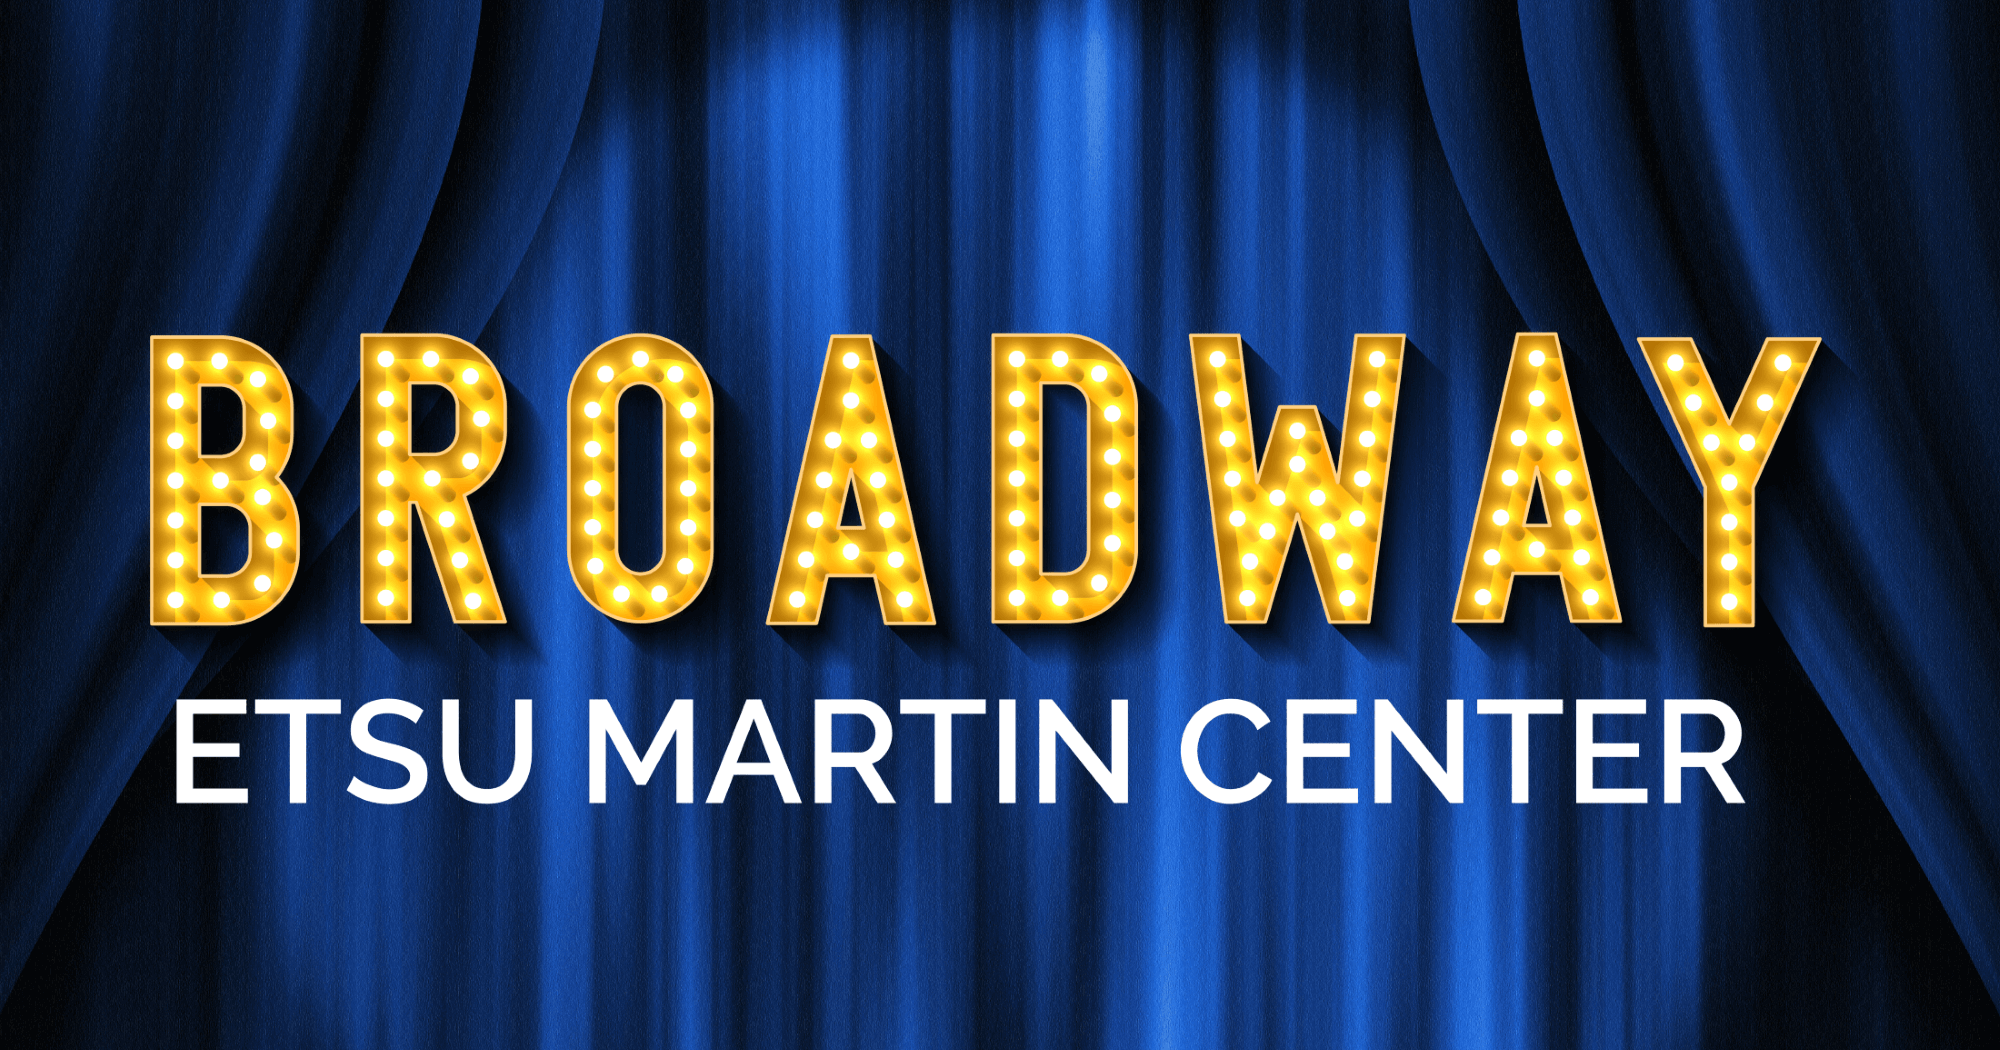 Broadway at ETSU Martin Center